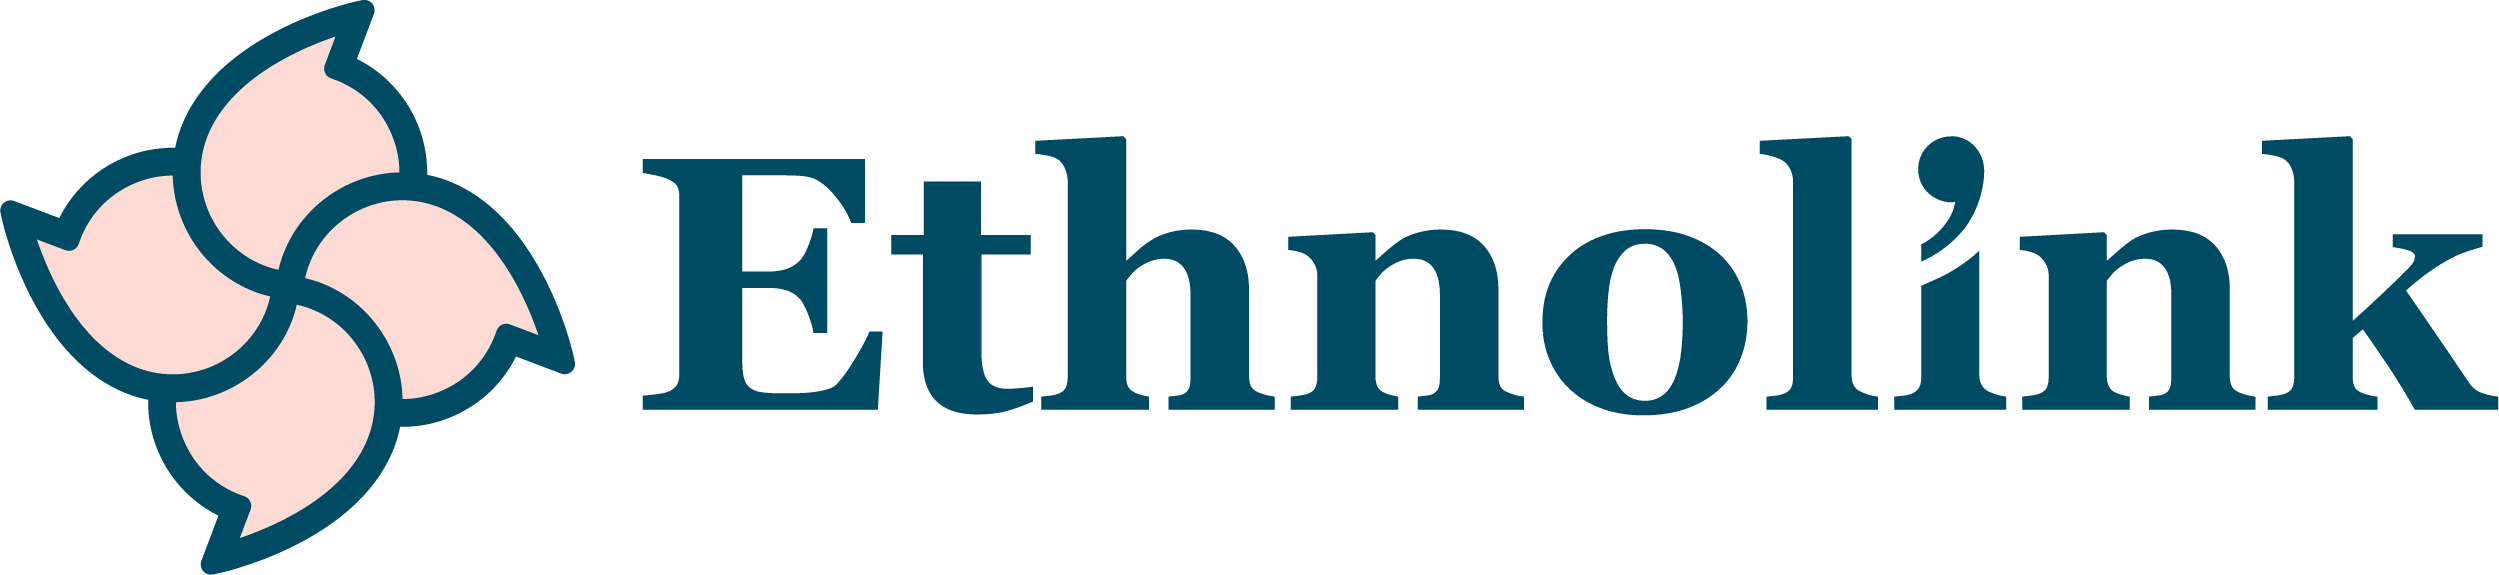 Ethnolink Logo Transparent (main)